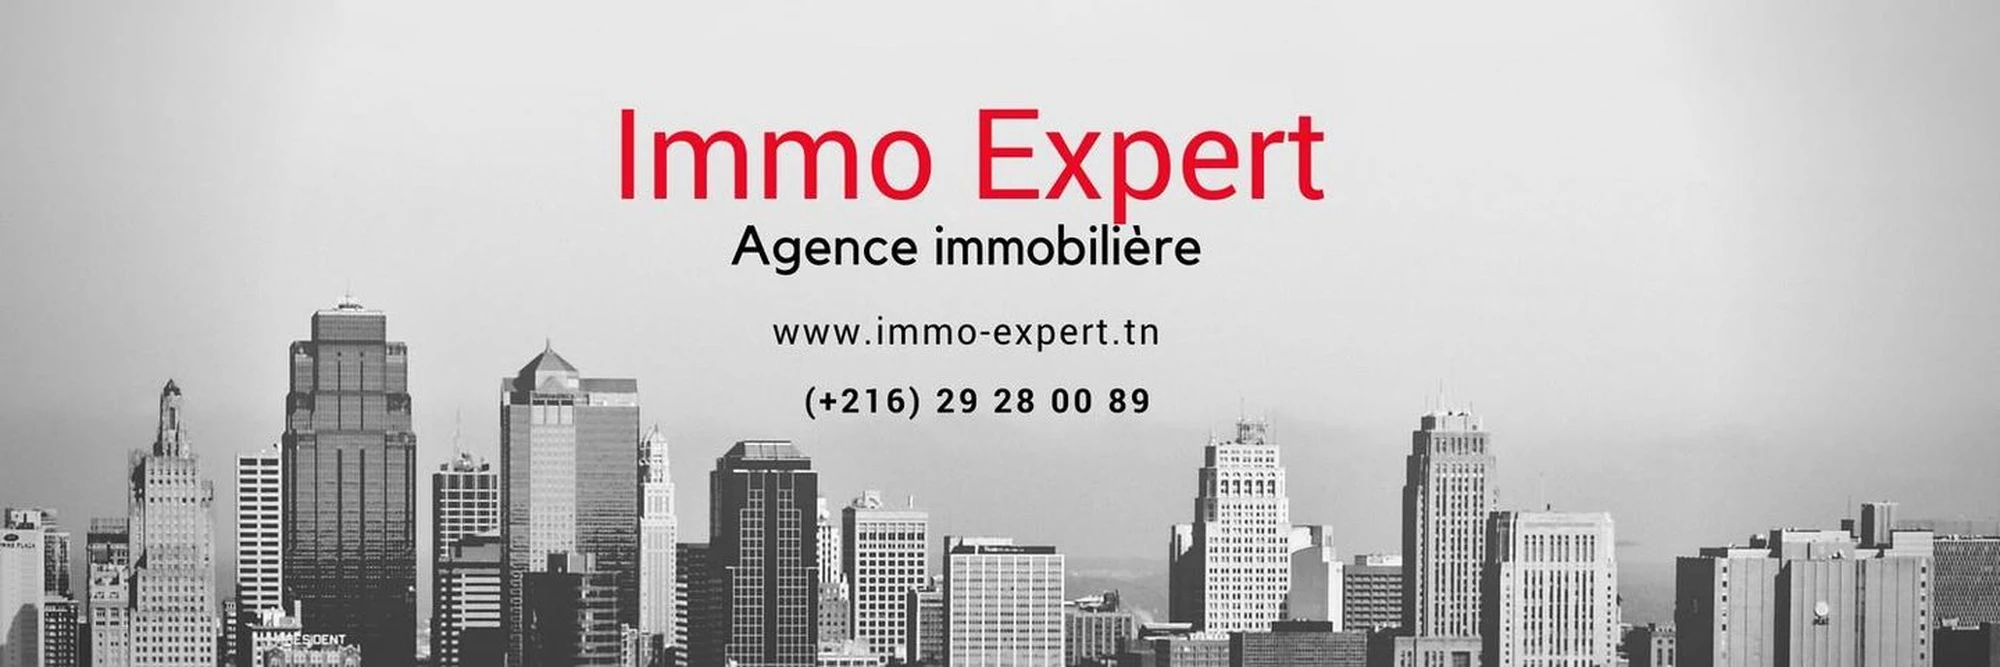 tayara shop cover of Immo Expert